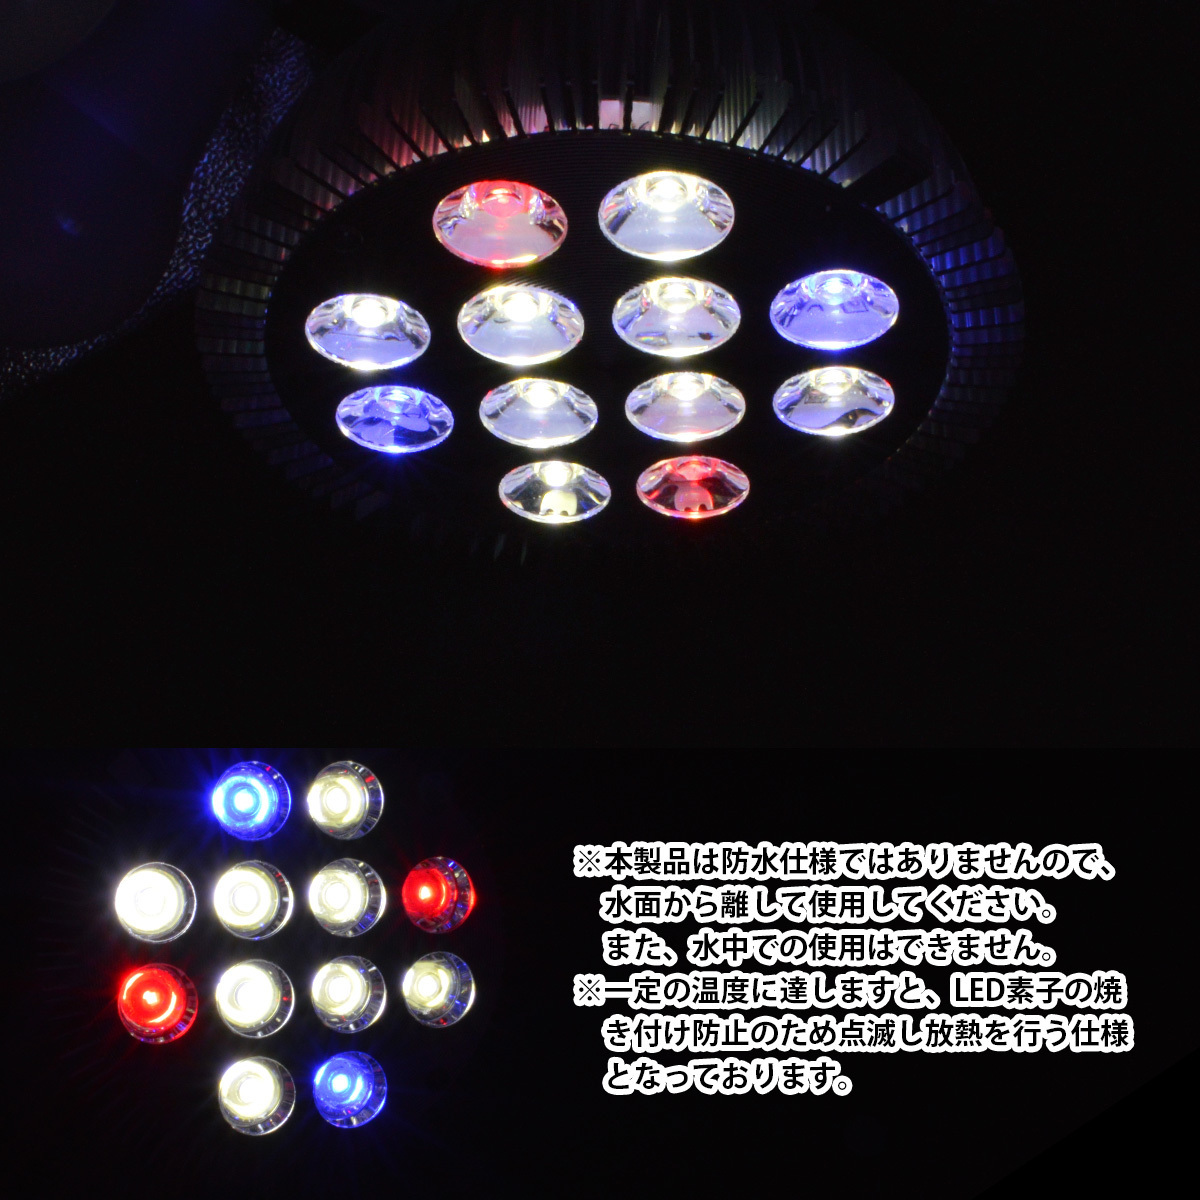 LED 電球 スポットライト 24W(2W×12)白8青2赤2 水槽 照明 E26 LEDスポットライト 電気 水草 サンゴ 熱帯魚 観賞魚 植物育成_画像4